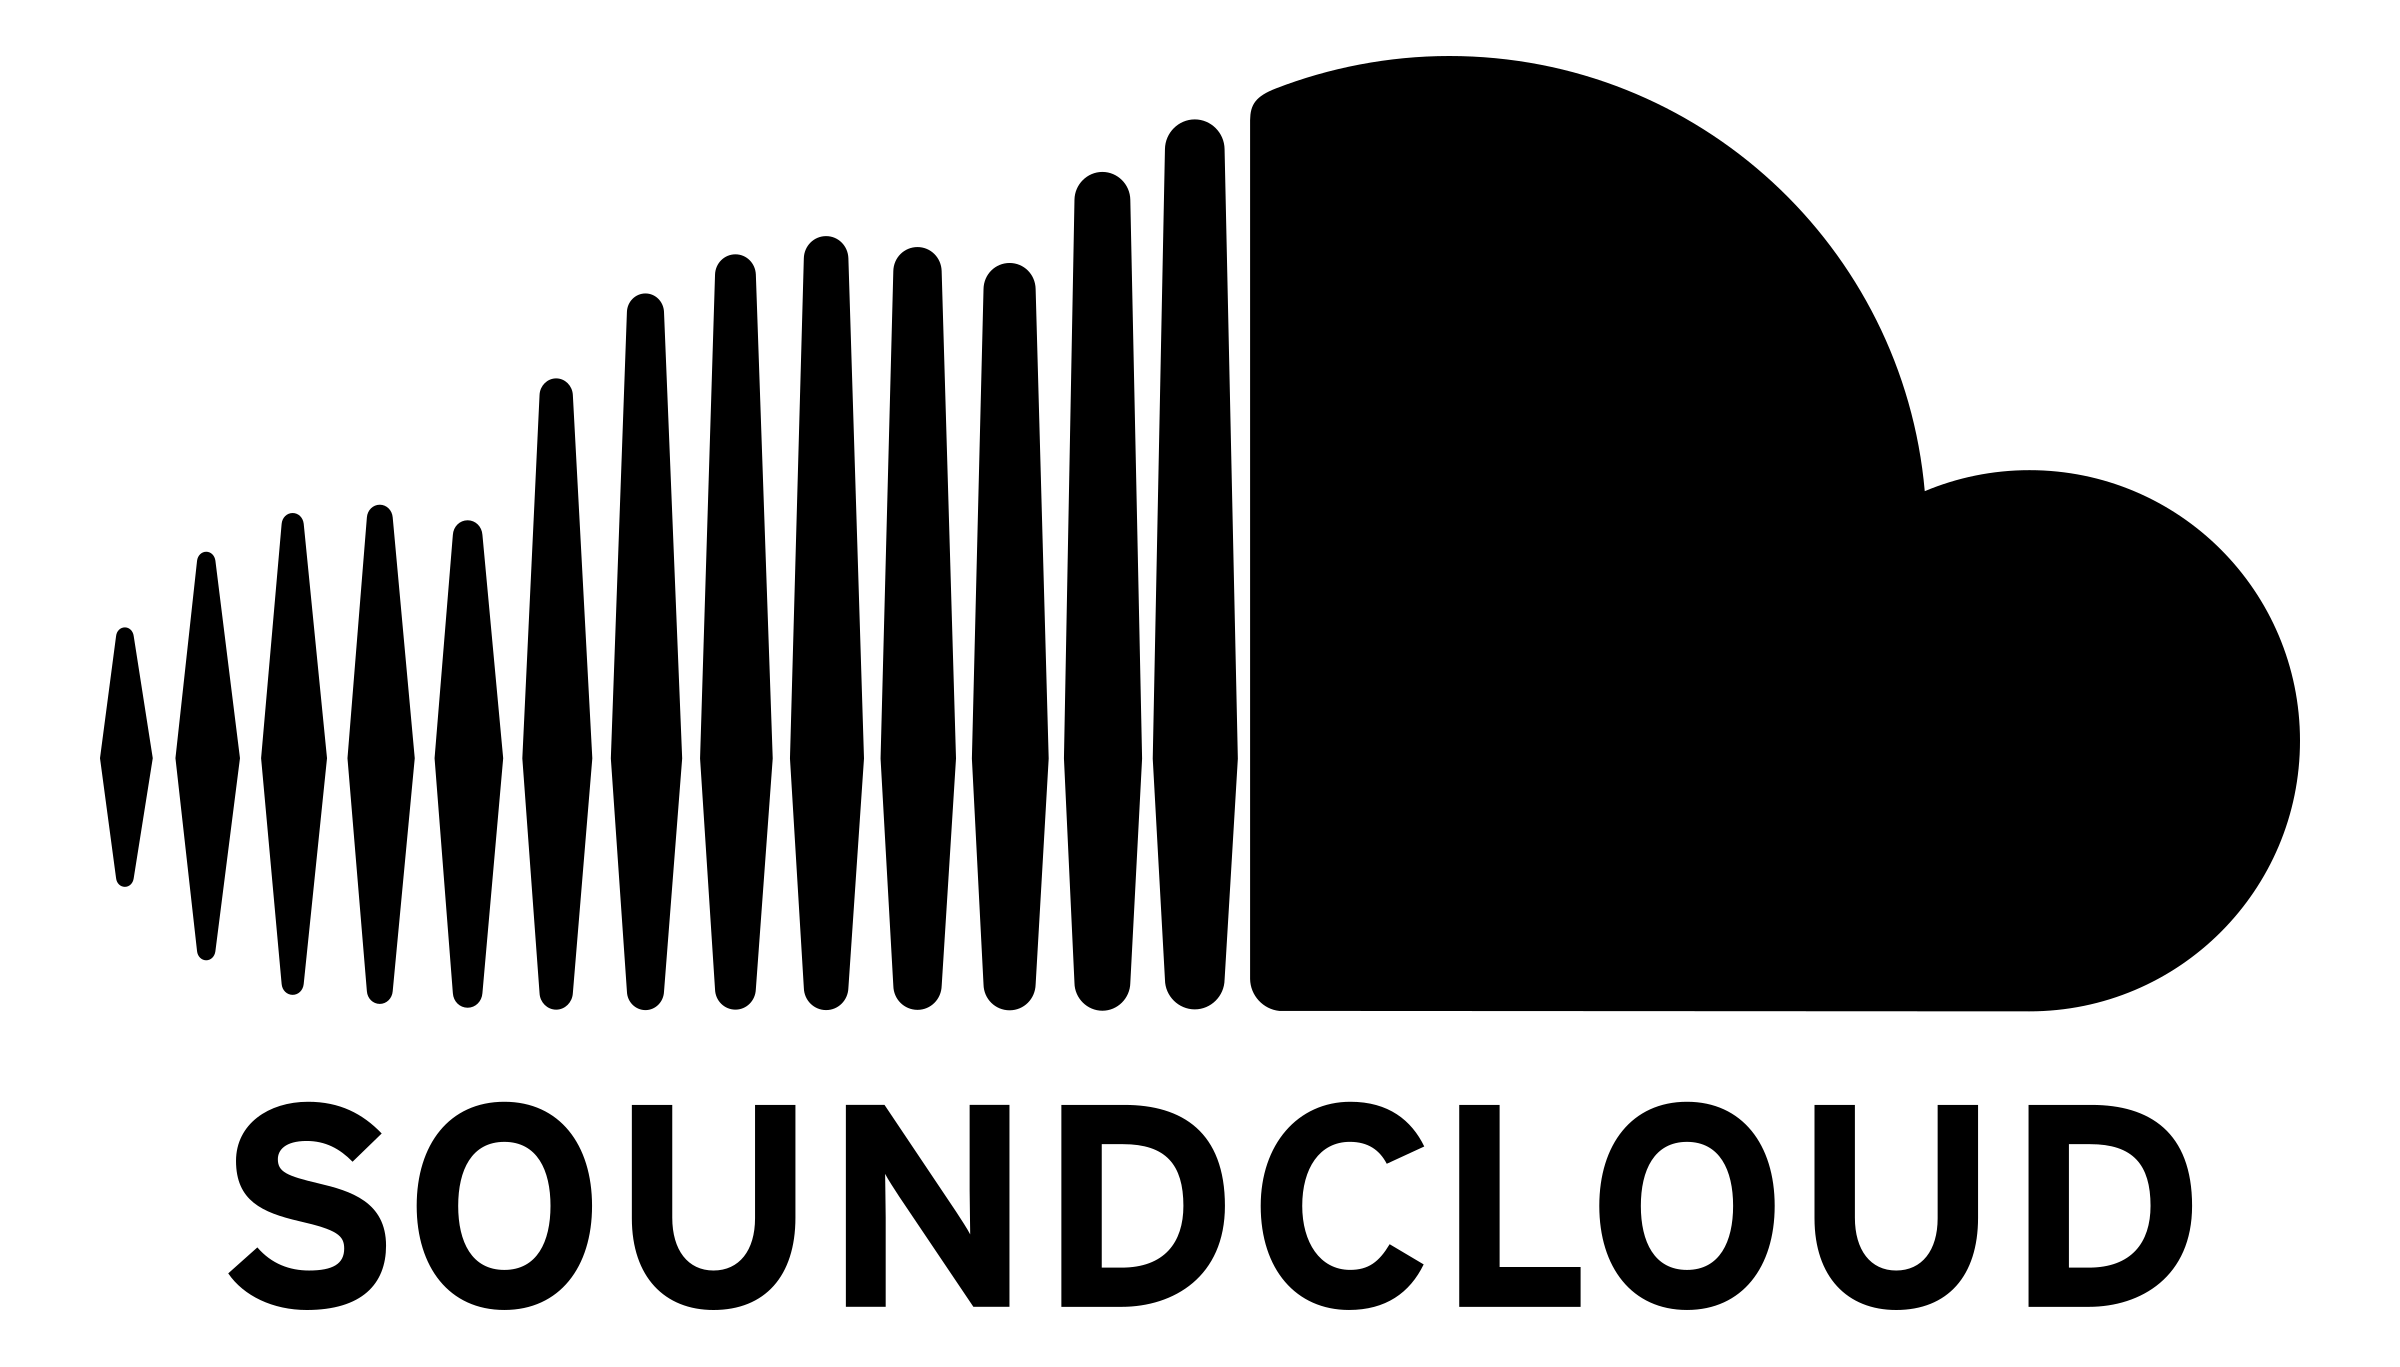 Transparent SoundCloud Logo - SoundCloud Logo PNG Transparent & SVG Vector - Freebie Supply